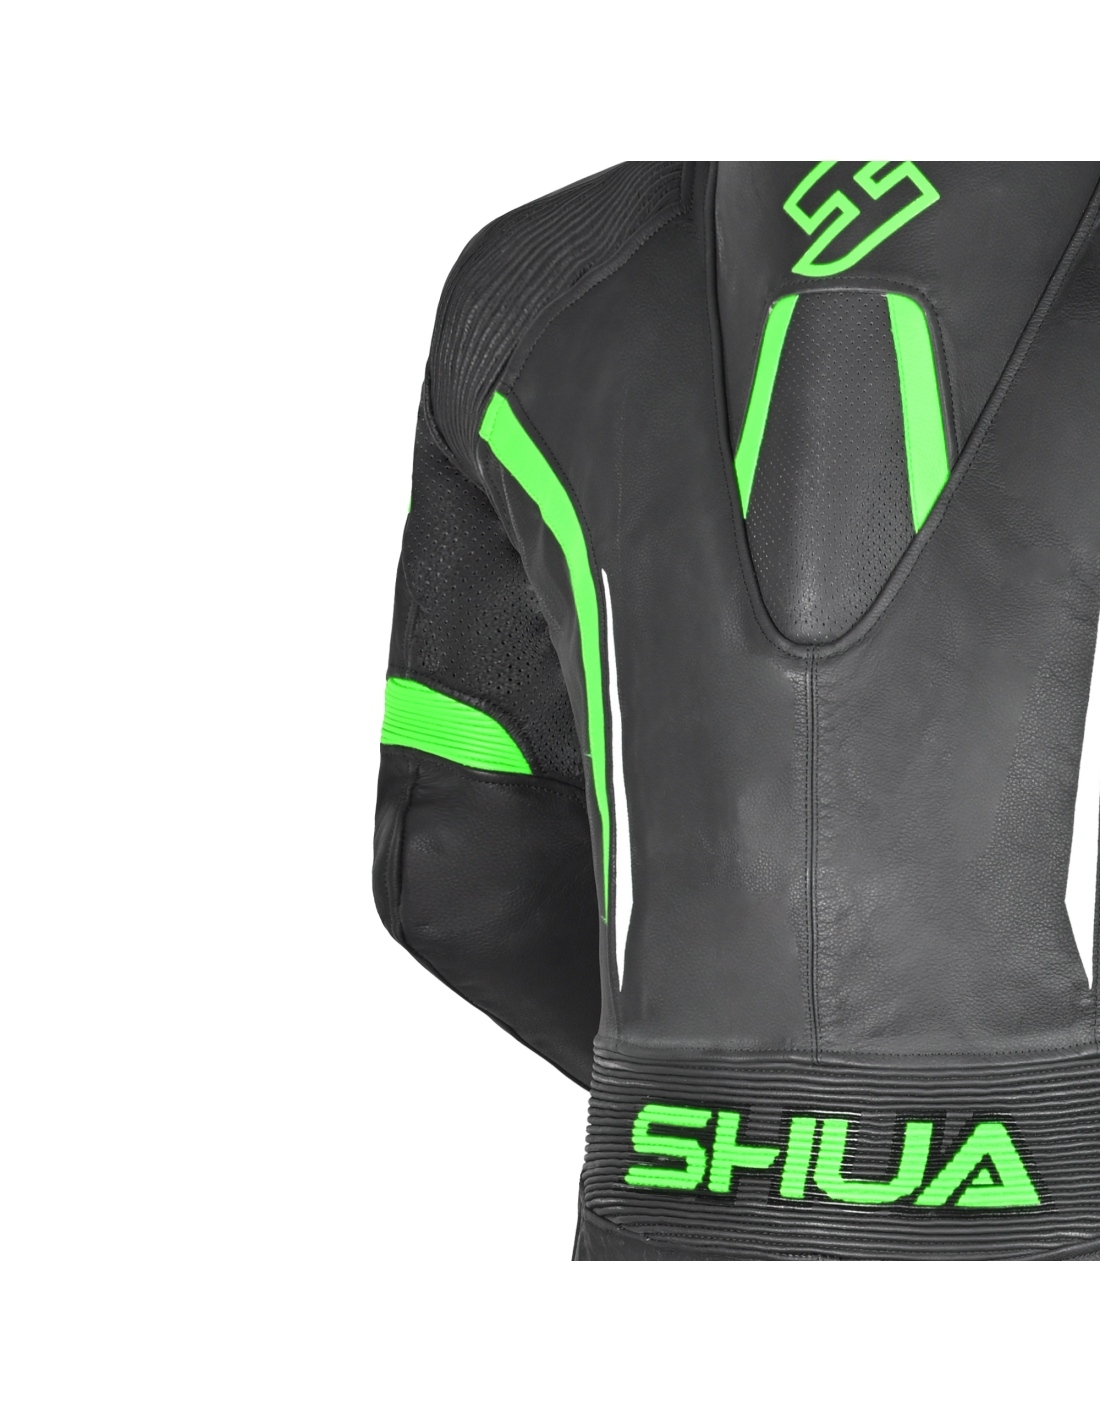 Shua Infinity Combinaison moto homme 1 pièce en cuir Noir/Vert, Roady Sport